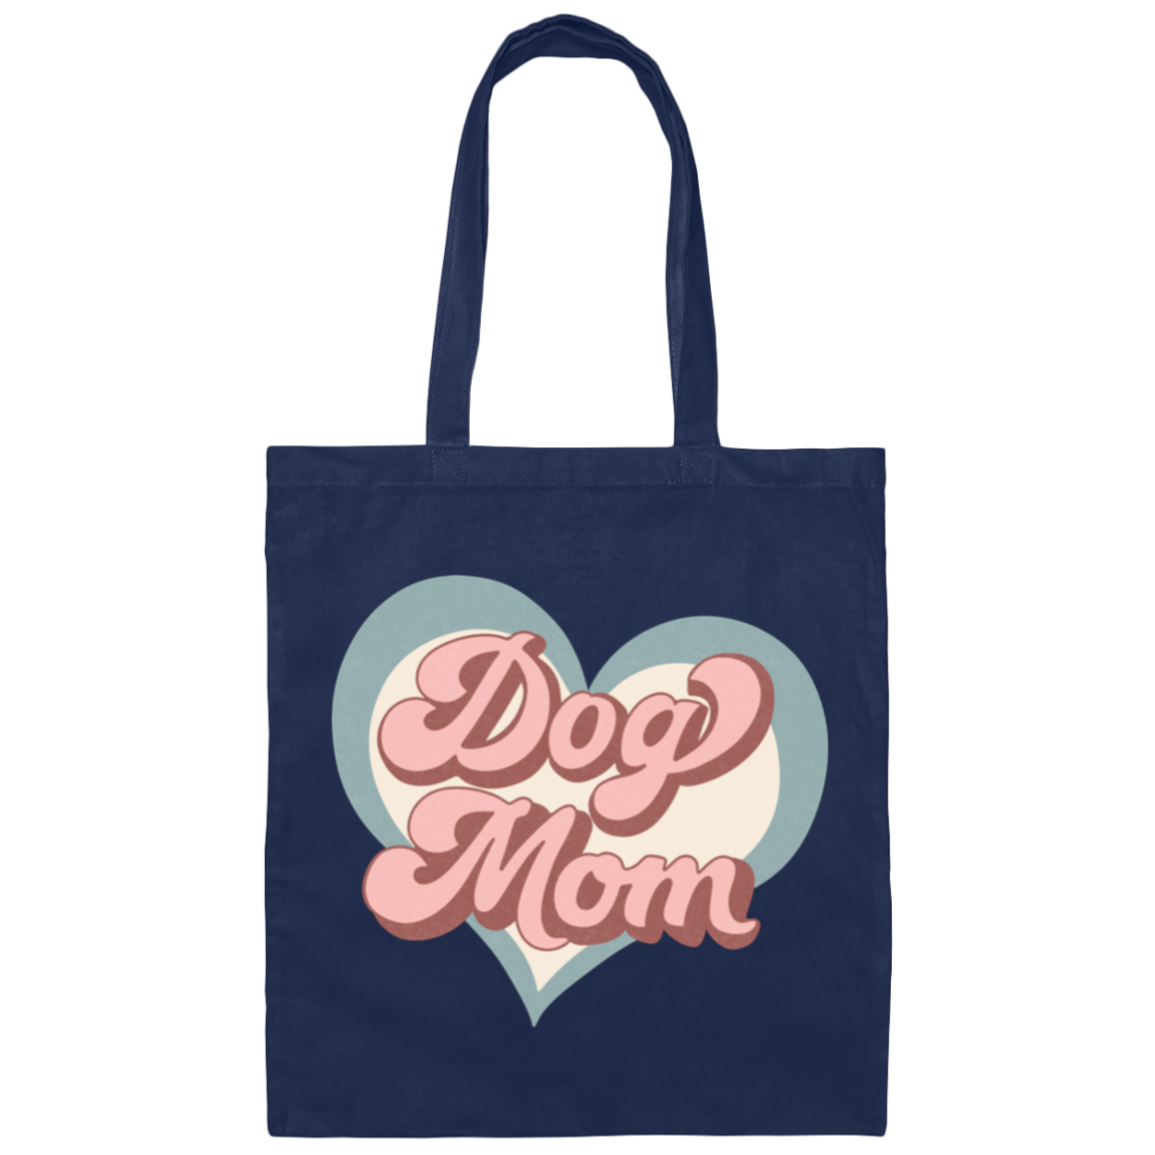 Dog Mom Retro Print with Hearts Canvas Tote Bag